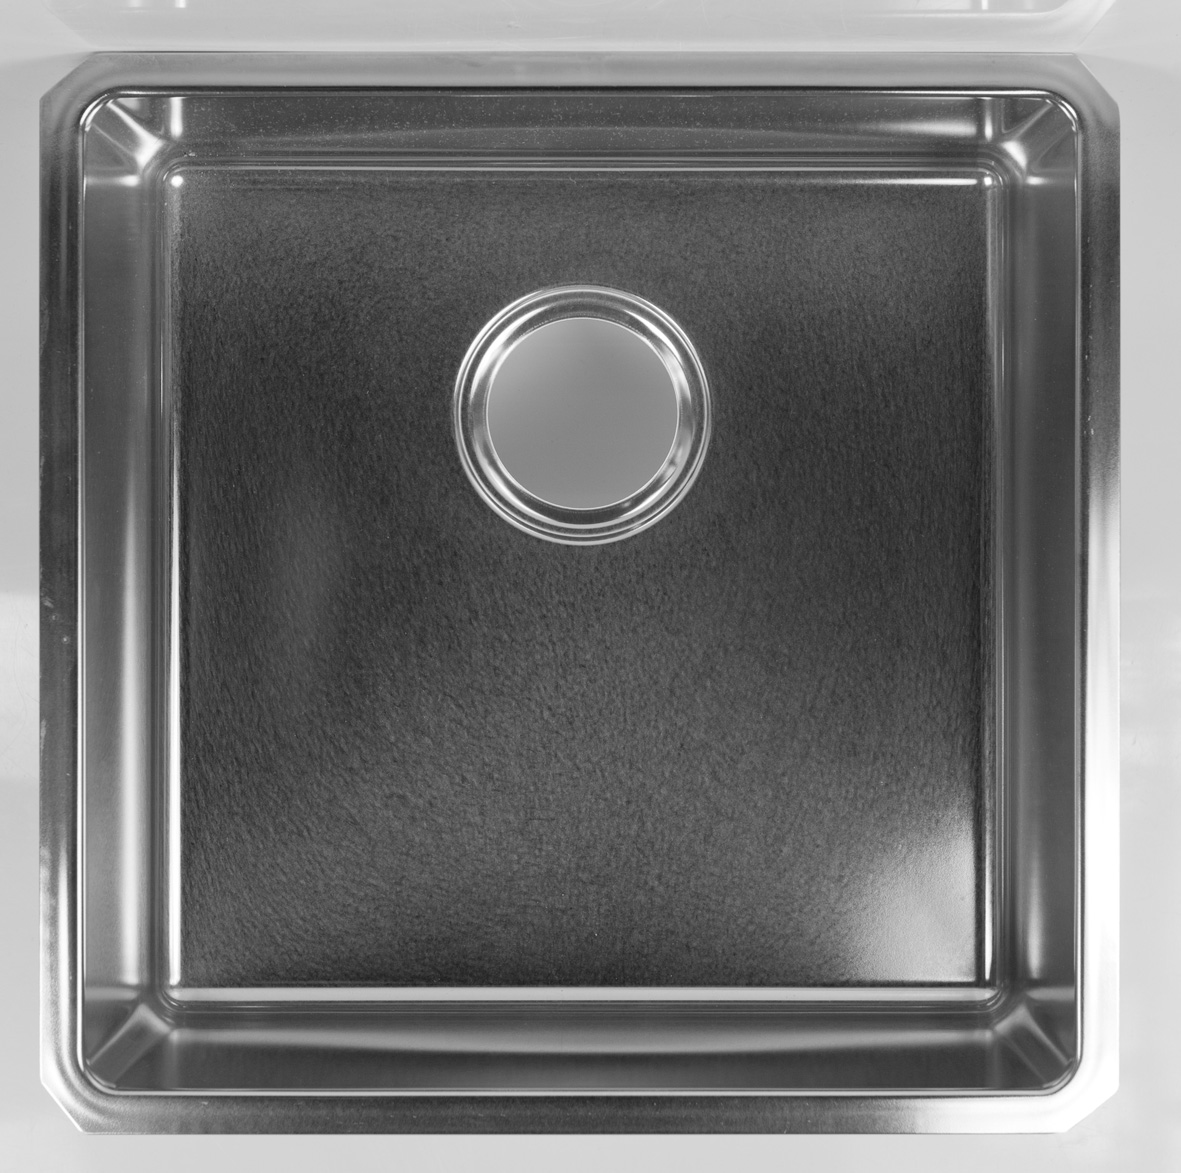 Tight corner radius sink 304 stainless steel 400 x 400 x 180